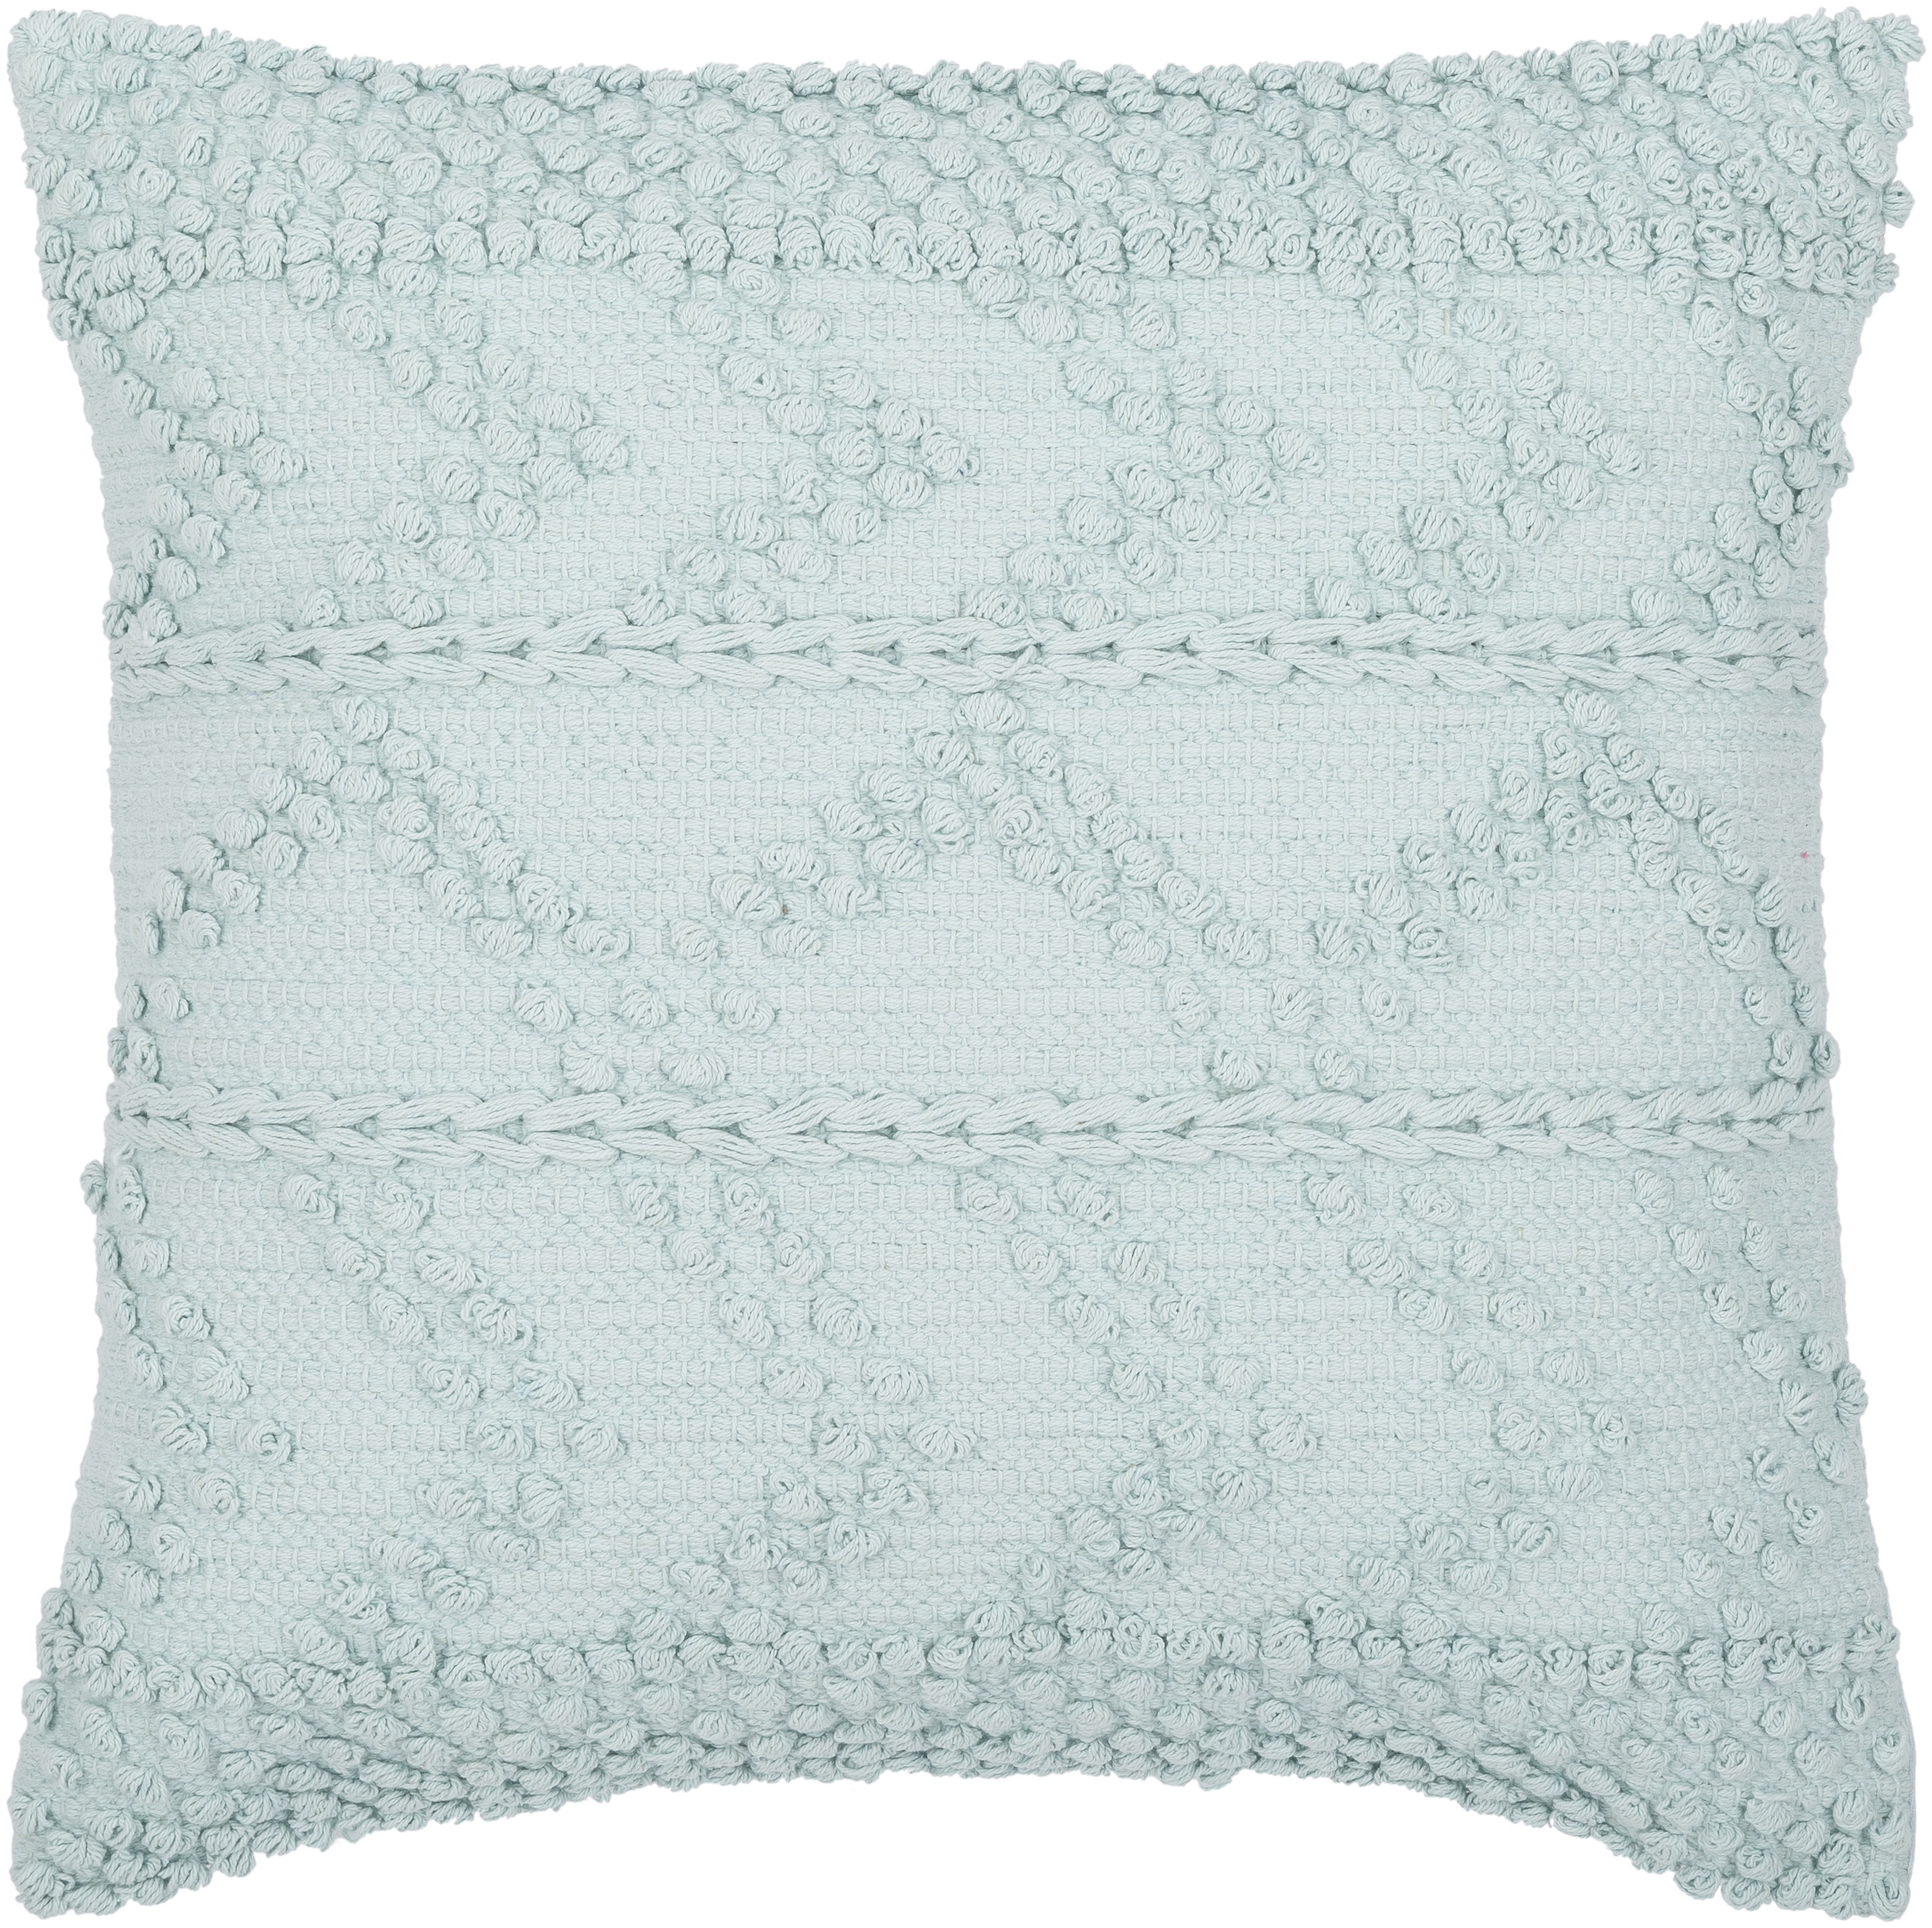 Merdo Throw Pillow, 18" x 18", with poly insert - Image 0